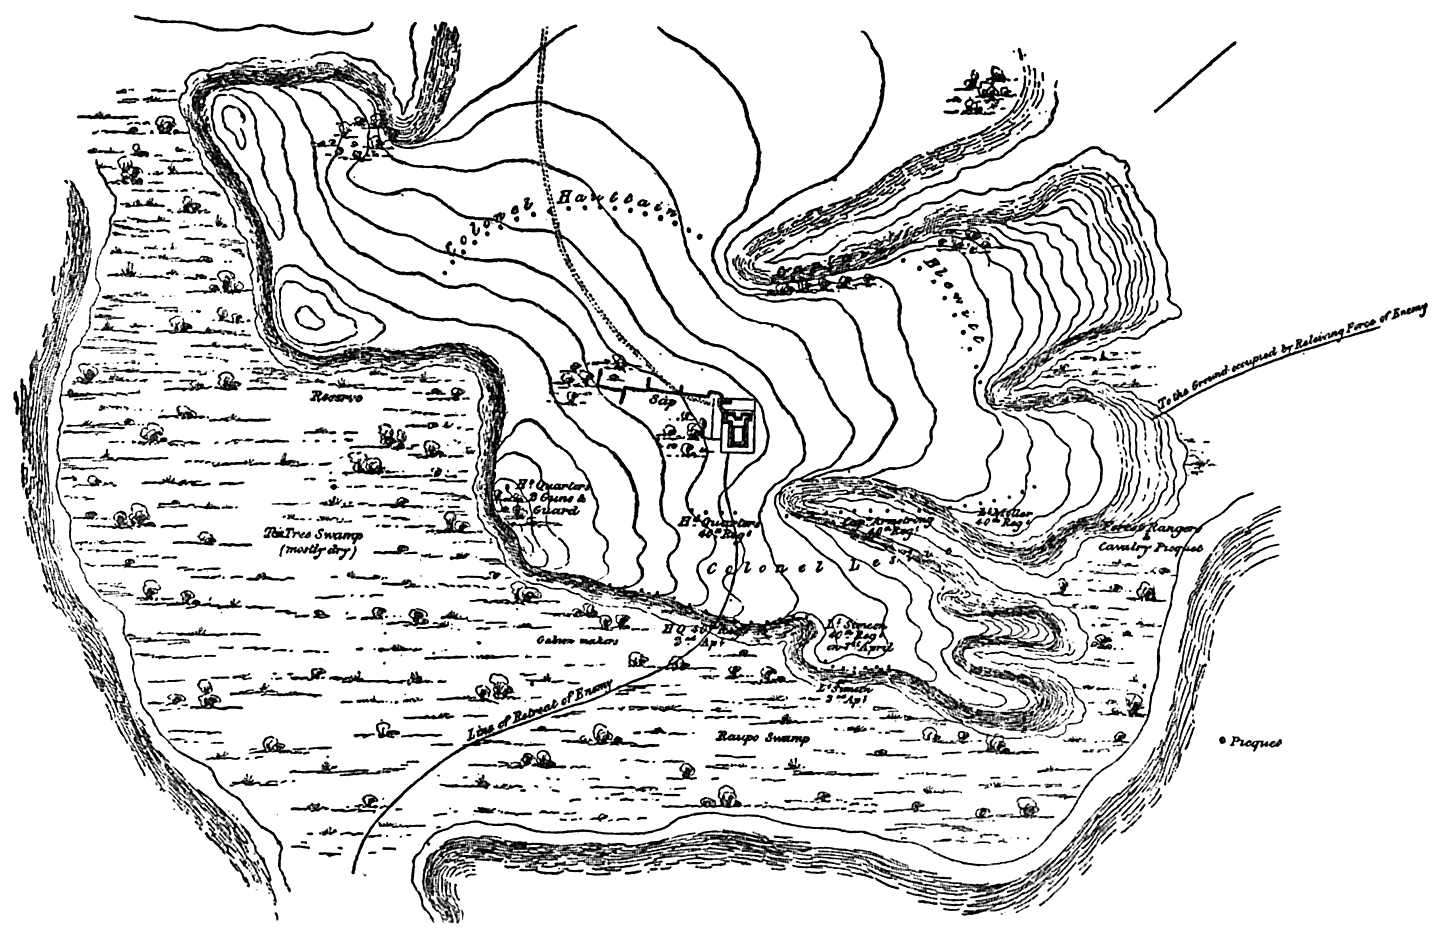 A PLAN OF THE BATTLEFIELD OF ORAKAU. 1864.